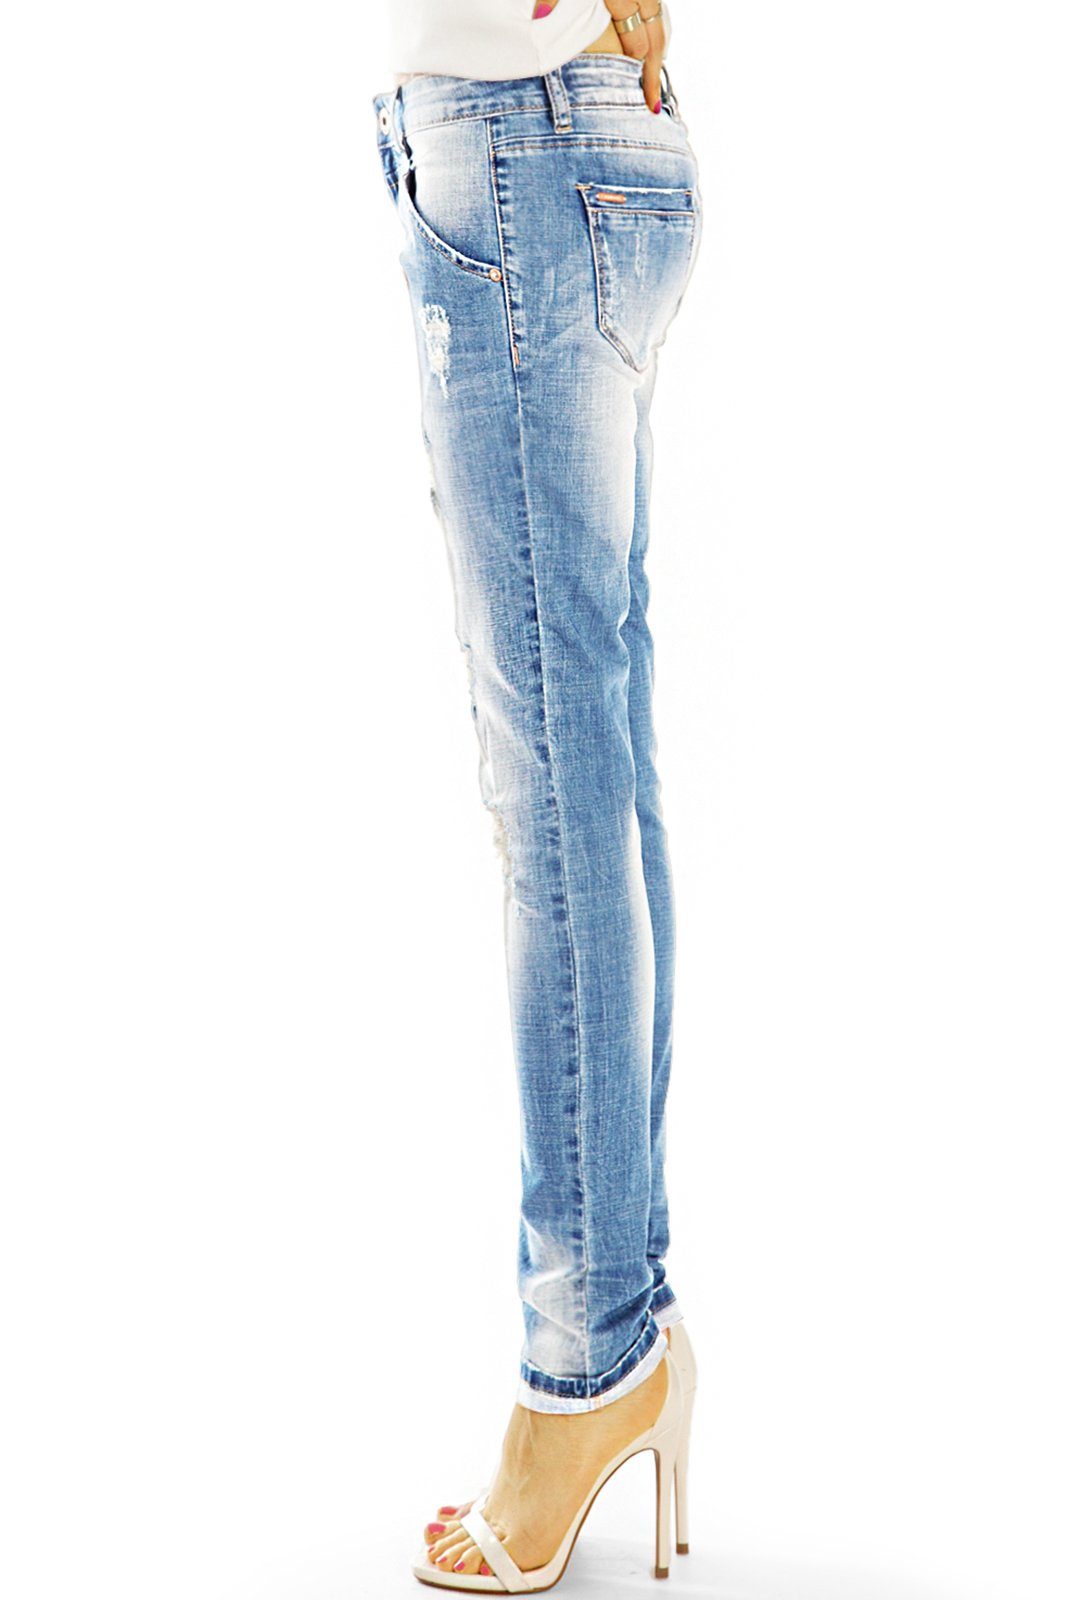 mit styled waist Destroyed-Jeans Röhrenjeans Hüftjeans Jeans- j14k-4 Vintage - 5-Pocket-Style Hosen Stretch-Anteil, be Slimfit Damen zerissene low Skinny